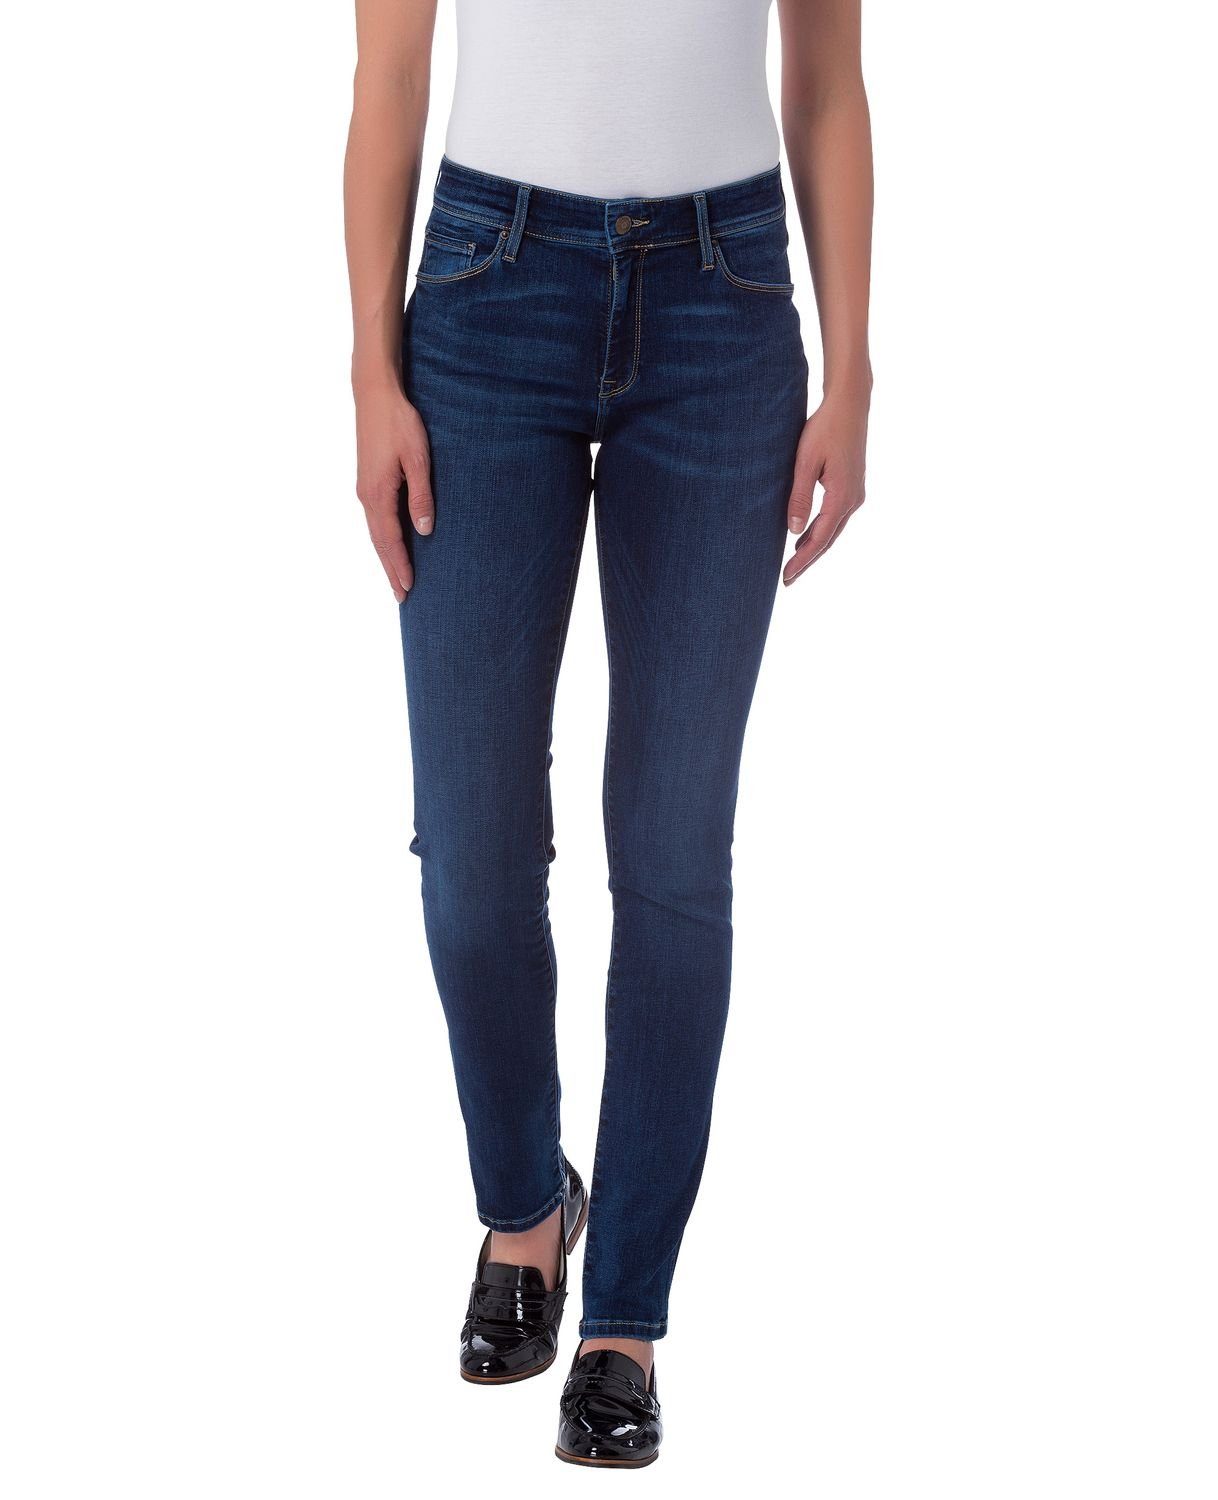 Jeanshose Stretch Anya CROSS Slim-fit-Jeans mit JEANS®